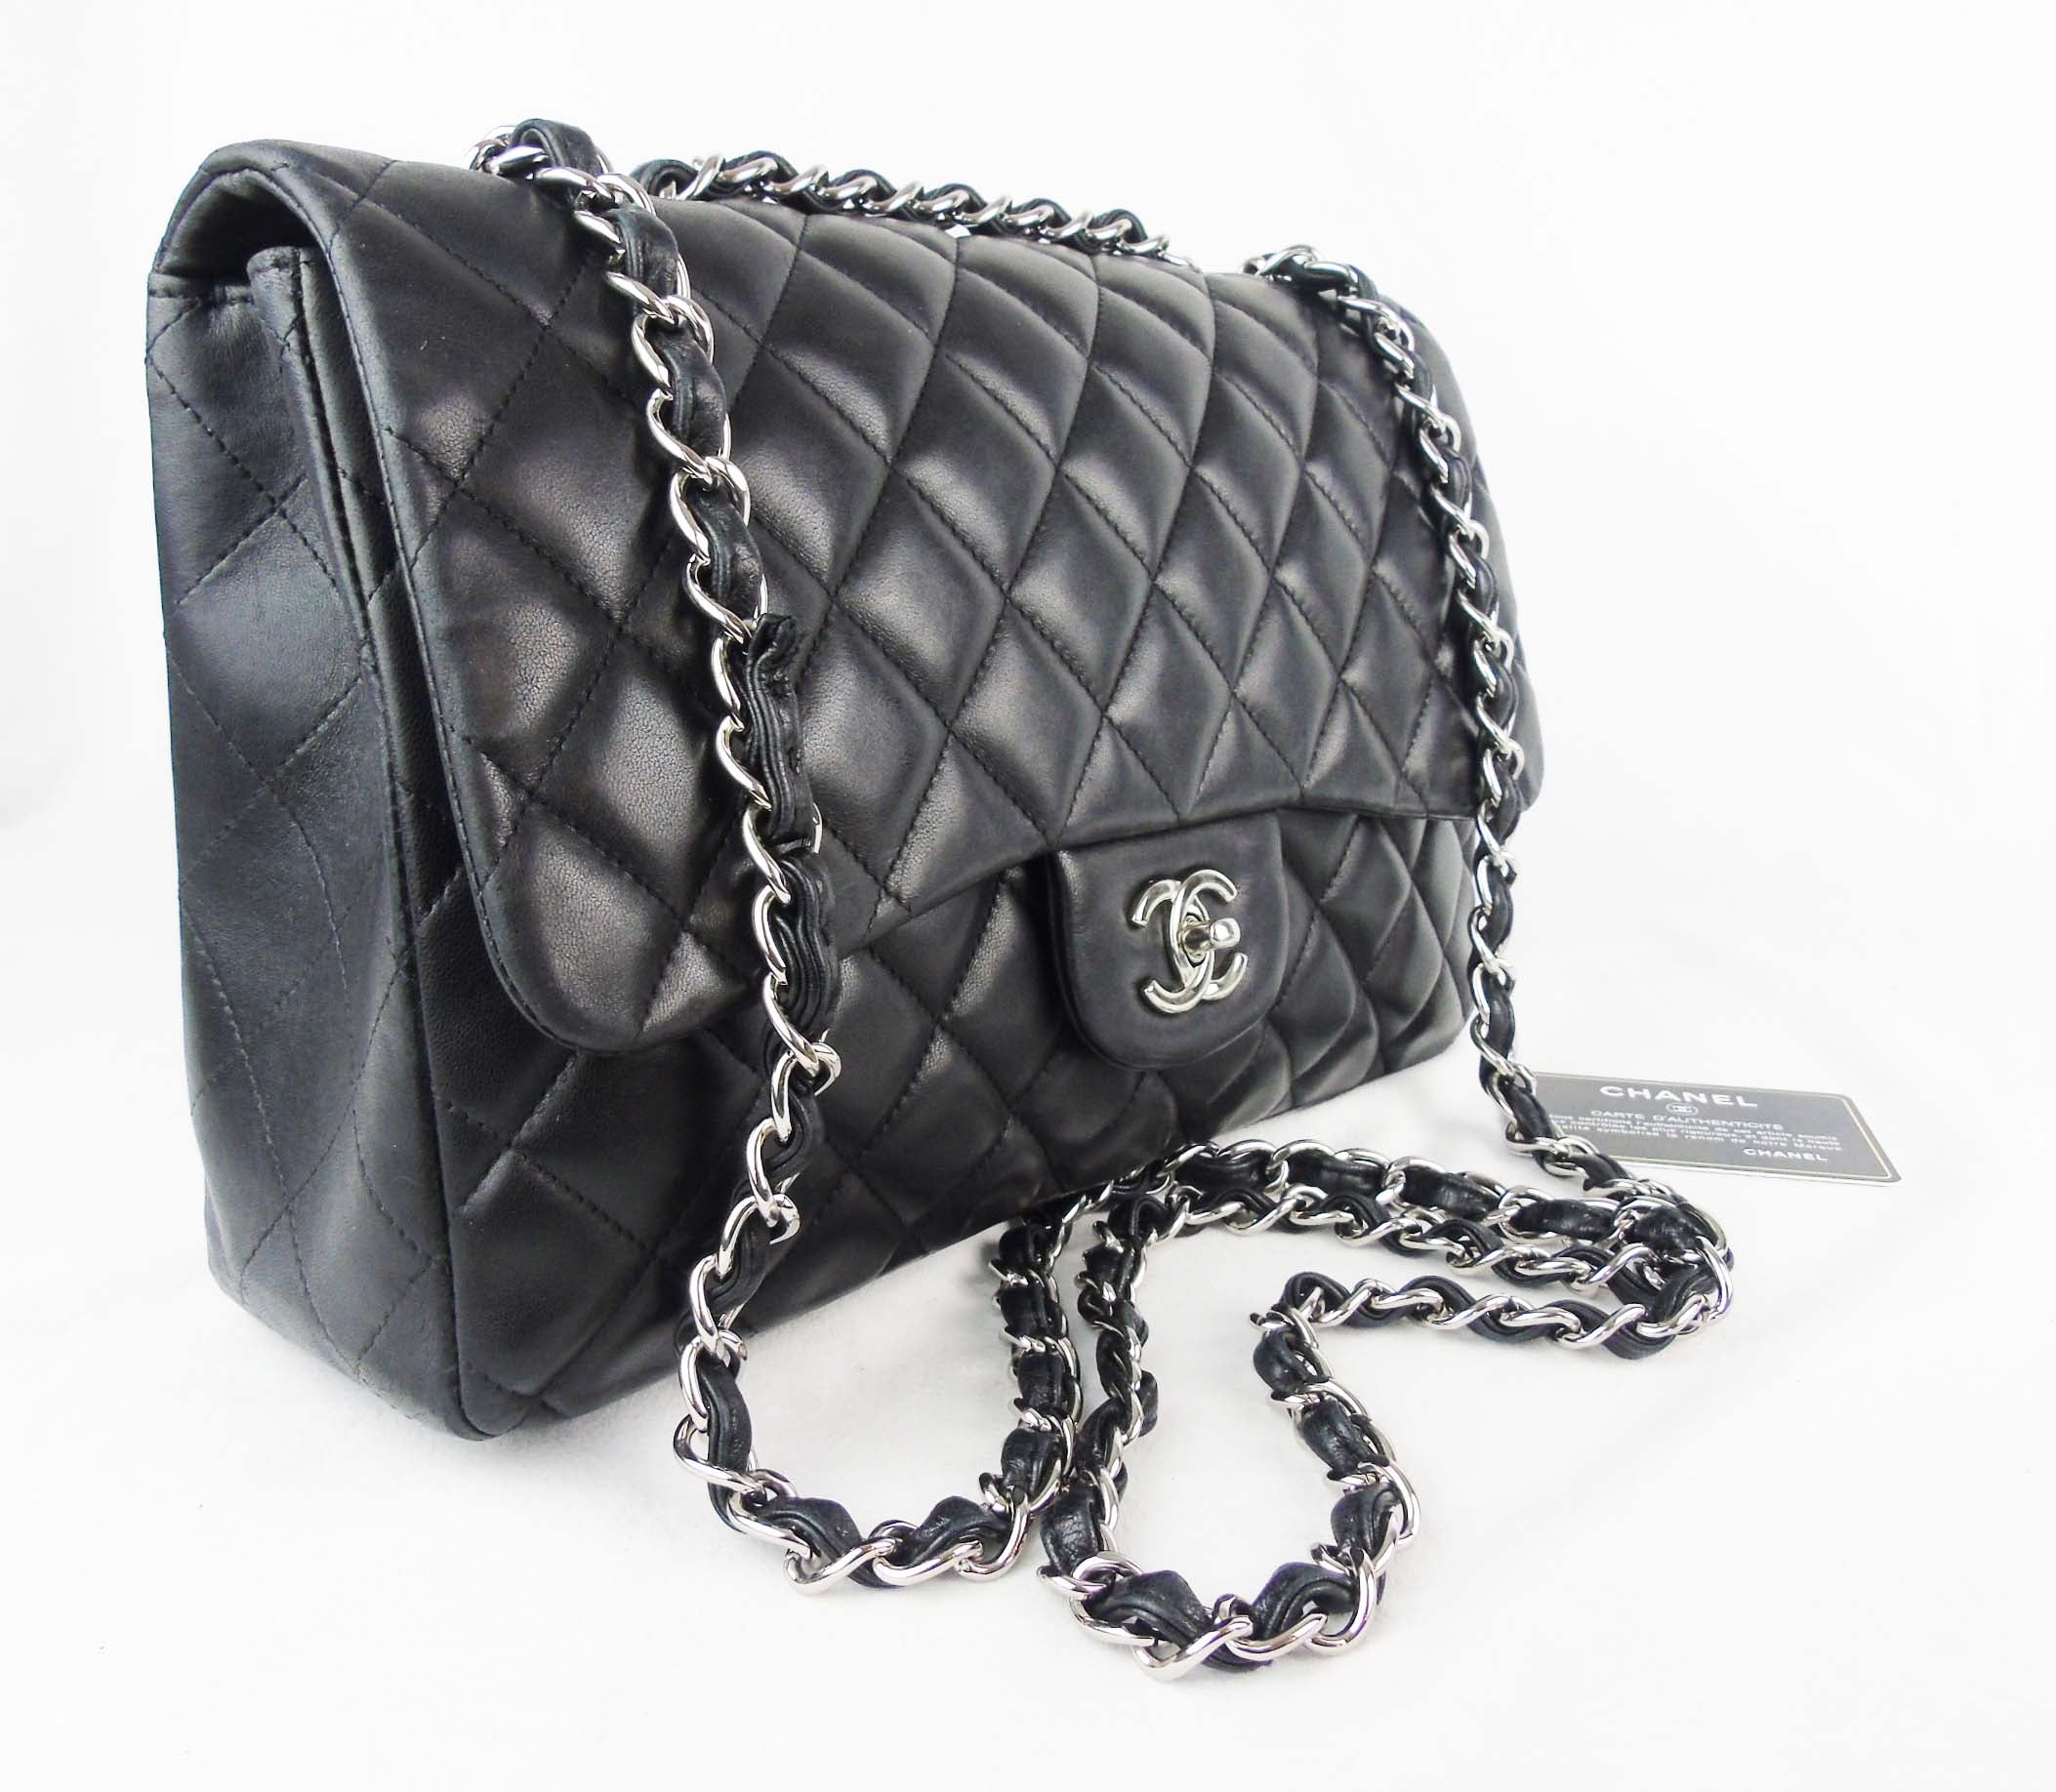 CHANEL jumbo flap bag in black grained leather - VALOIS VINTAGE PARIS